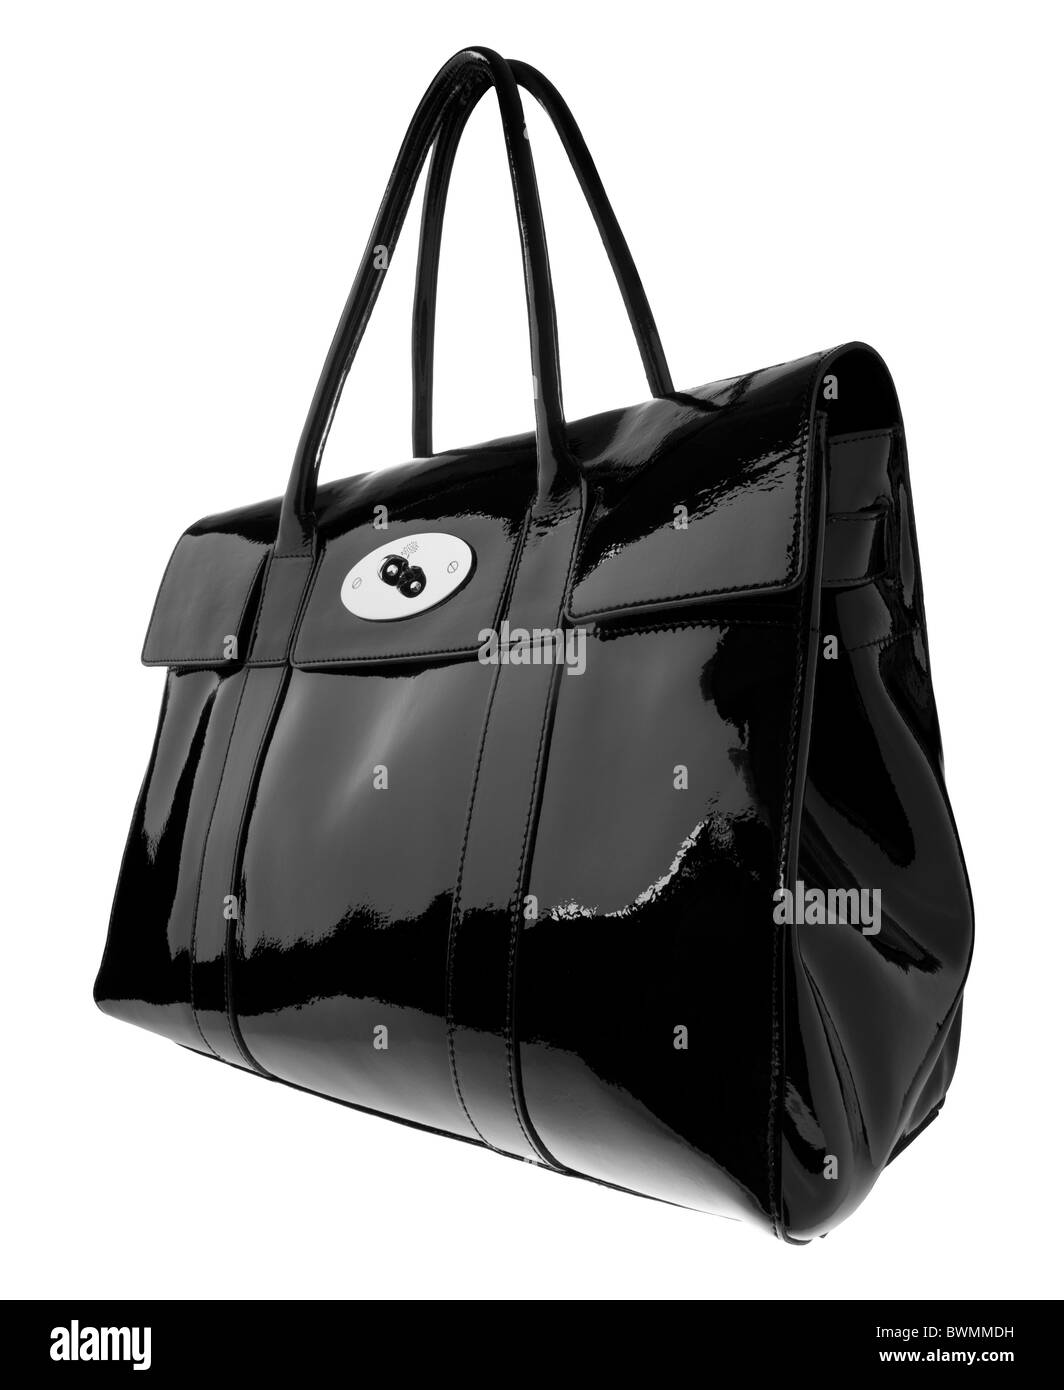 Handbag Black and White Stock Photos & Images - Alamy